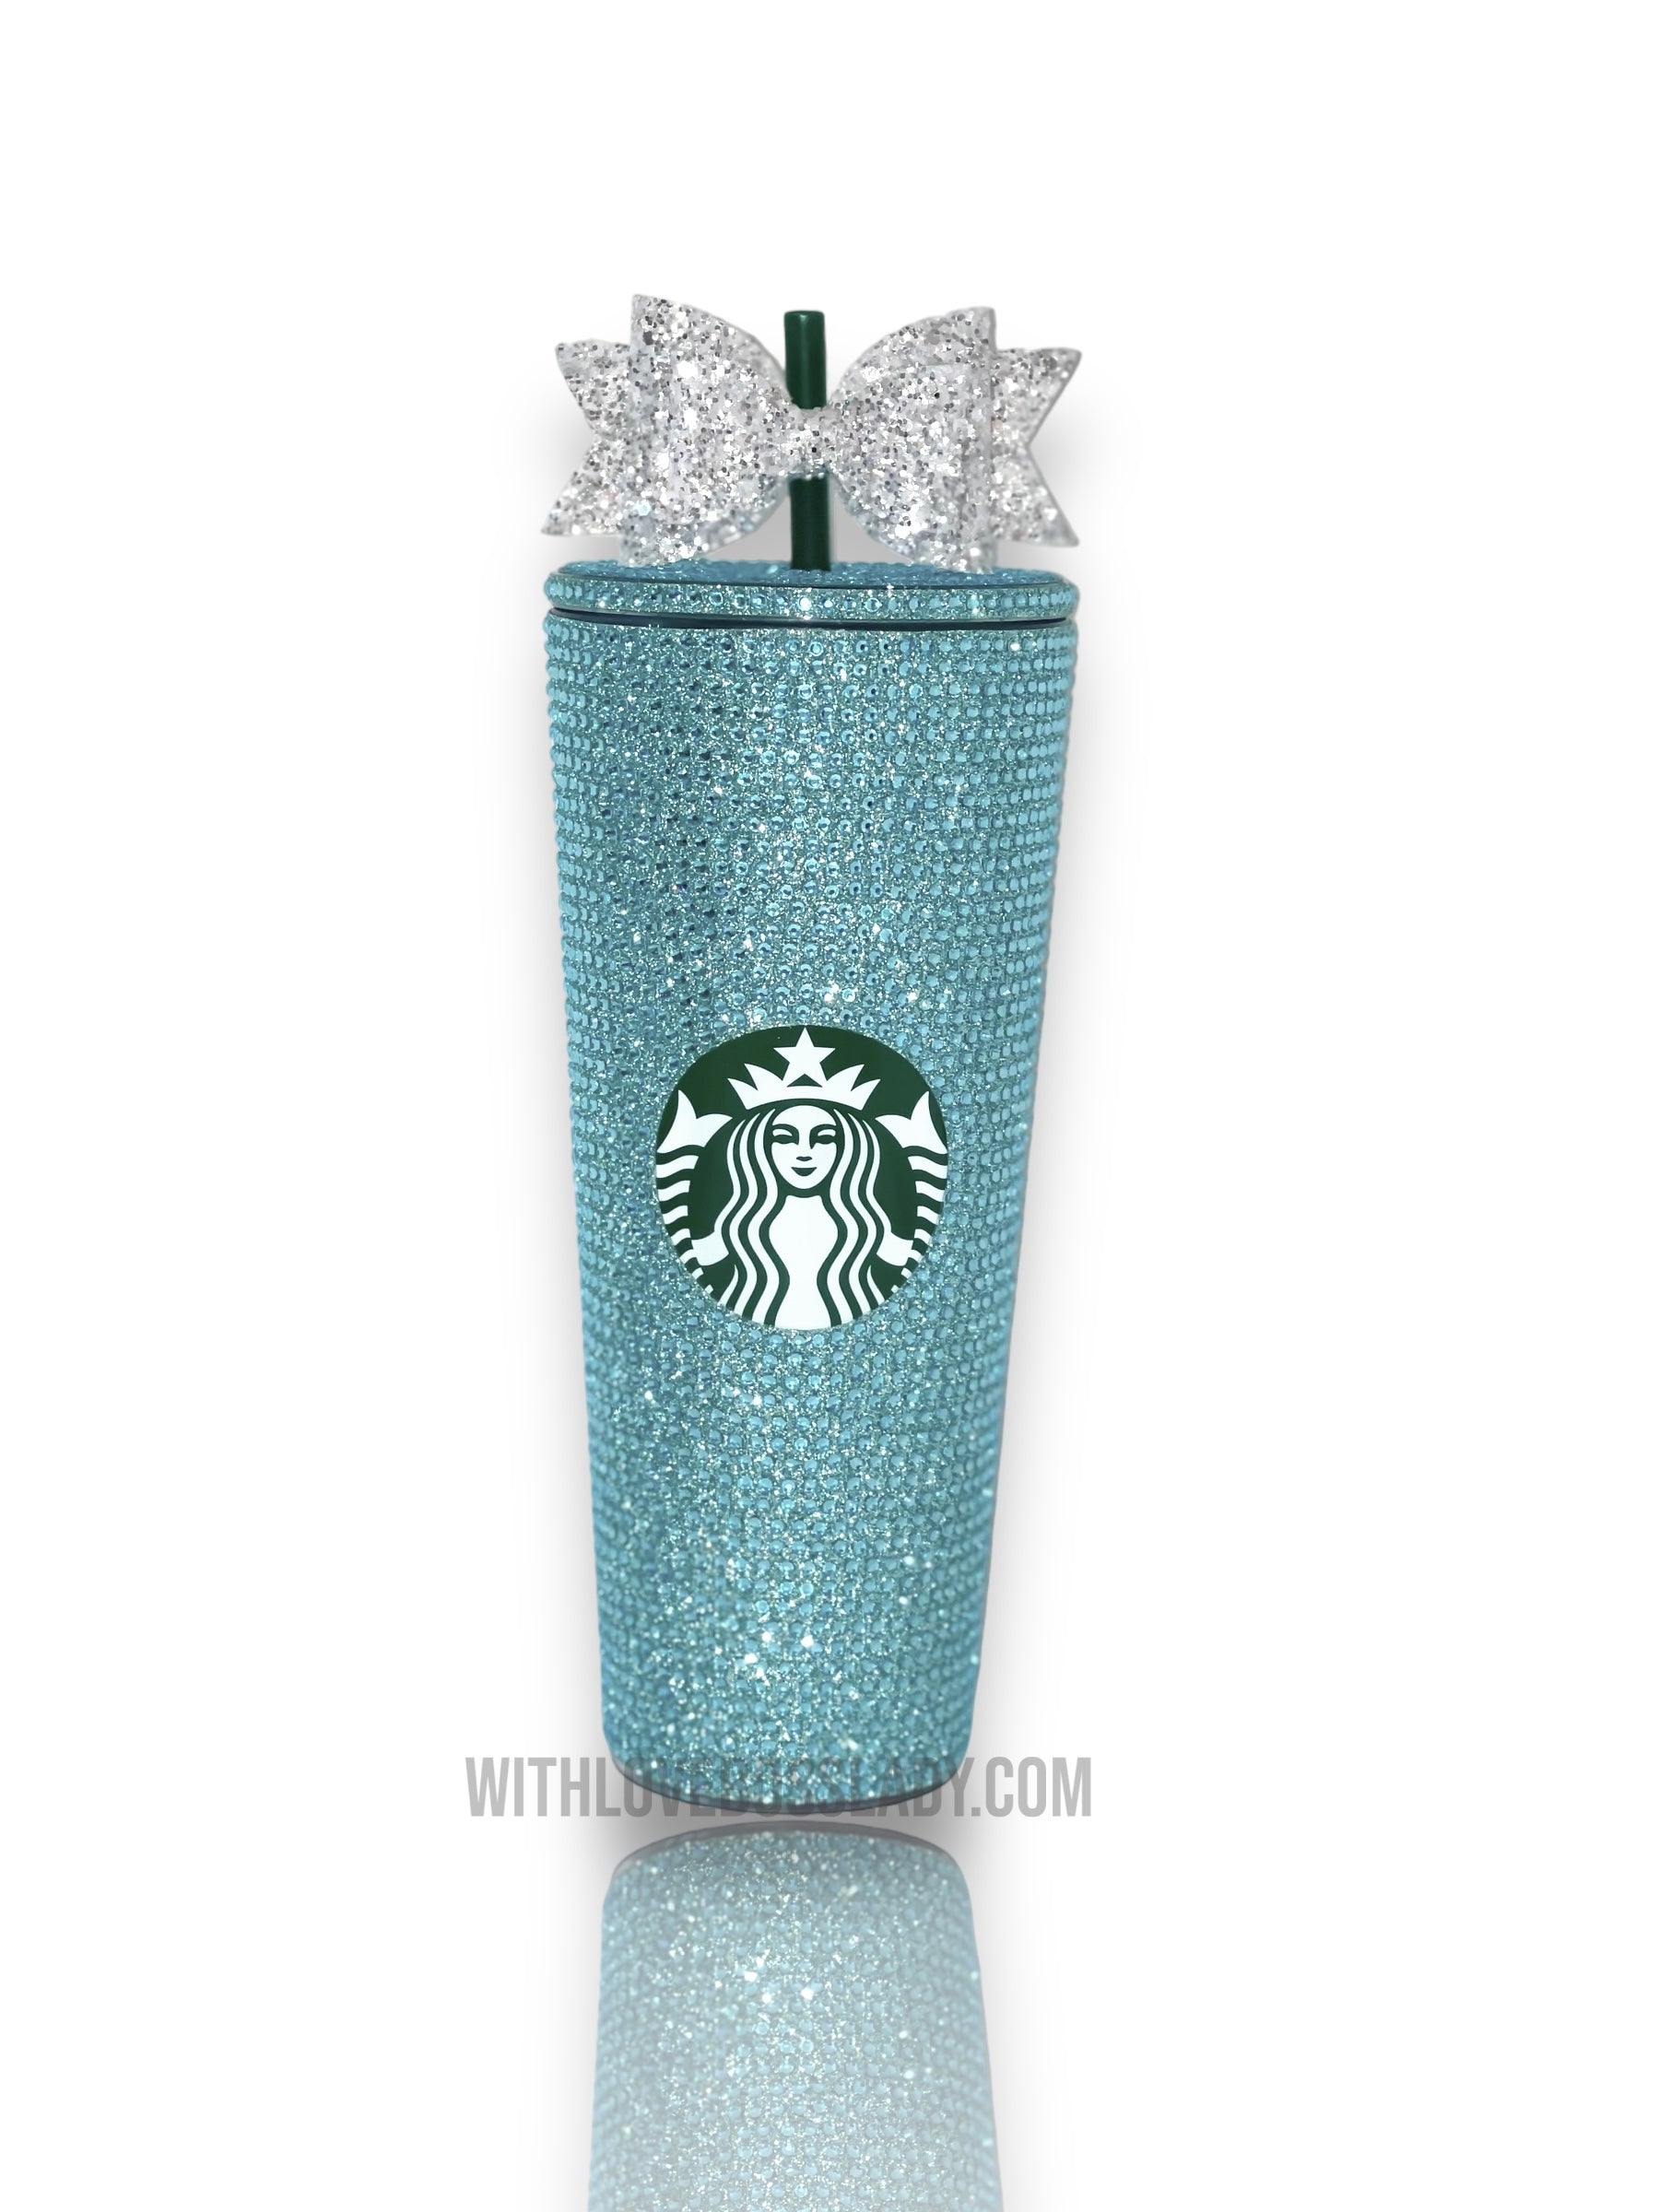 Starbucks Cup Light Blue Diamond Cut Crystals | Bedazzled Starbucks Tumbler